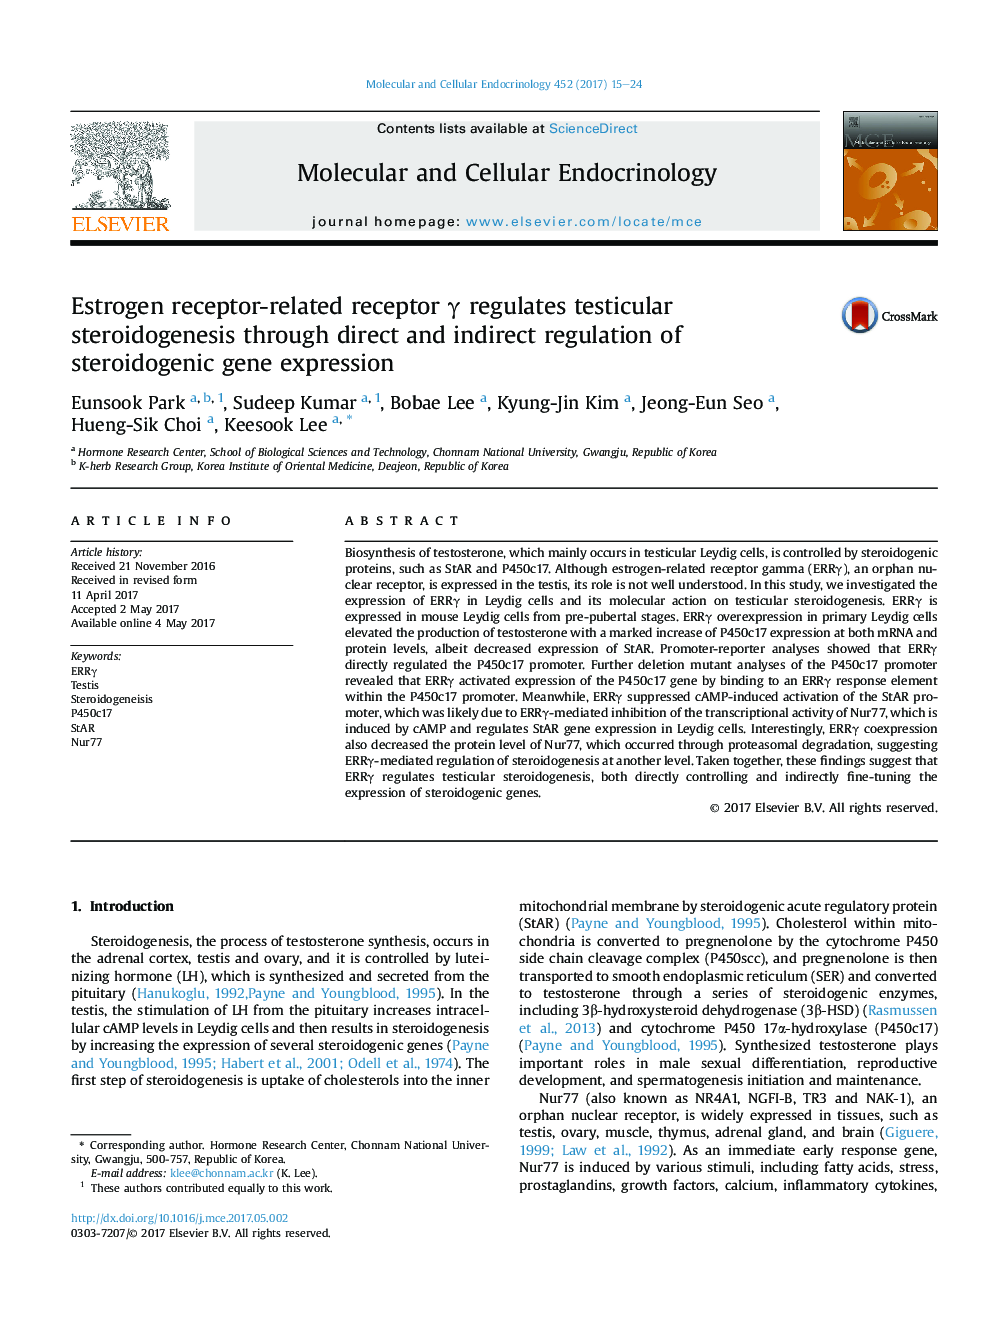 Estrogen receptor-related receptor Î³ regulates testicular steroidogenesis through direct and indirect regulation of steroidogenic gene expression